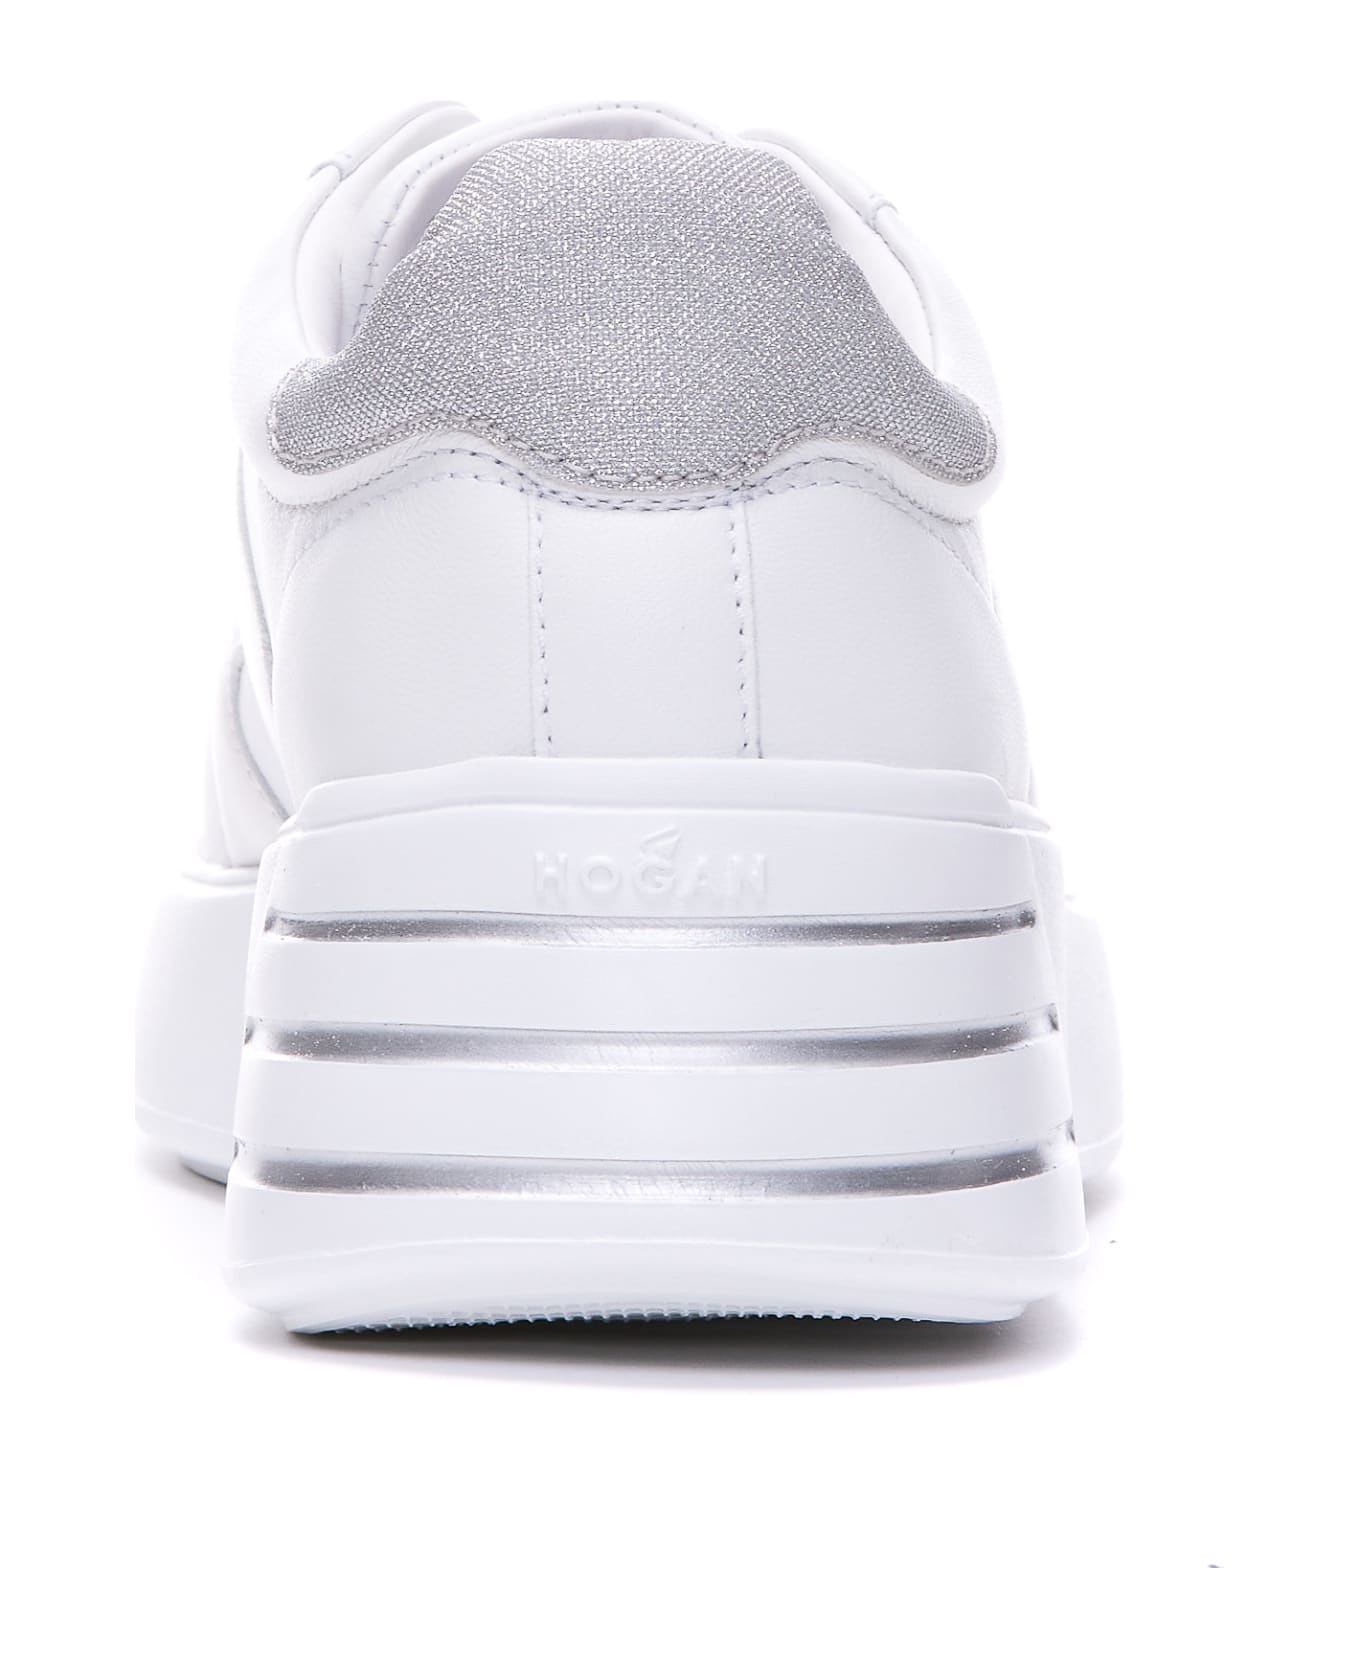 Hogan Rebel Sneakers - Bianco Argento